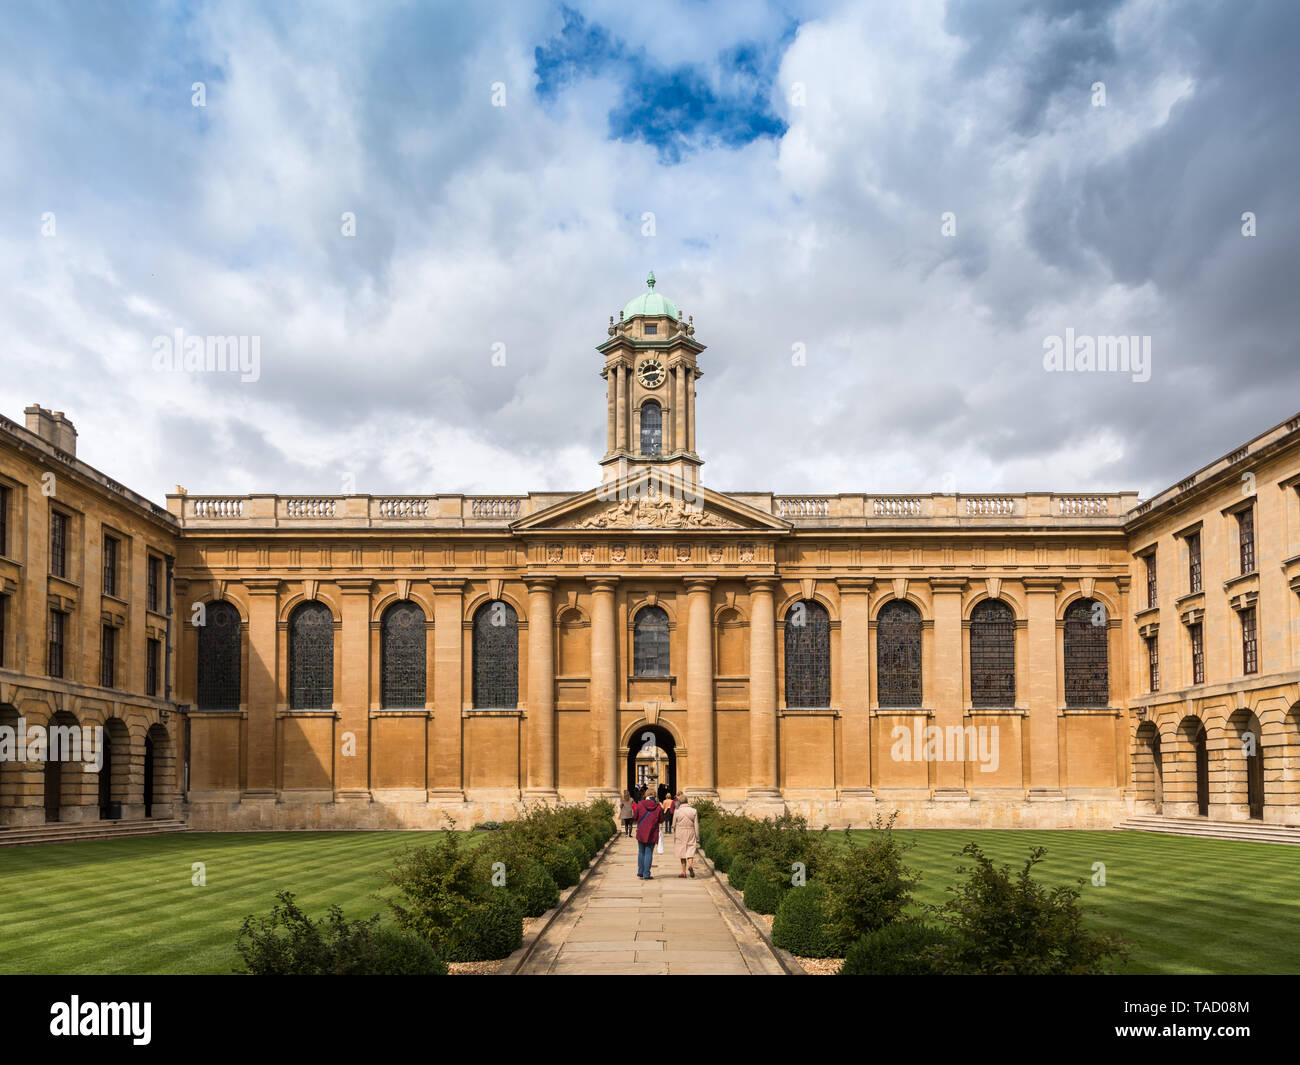 Queen's College/Quad, Oxford University, UK Banque D'Images